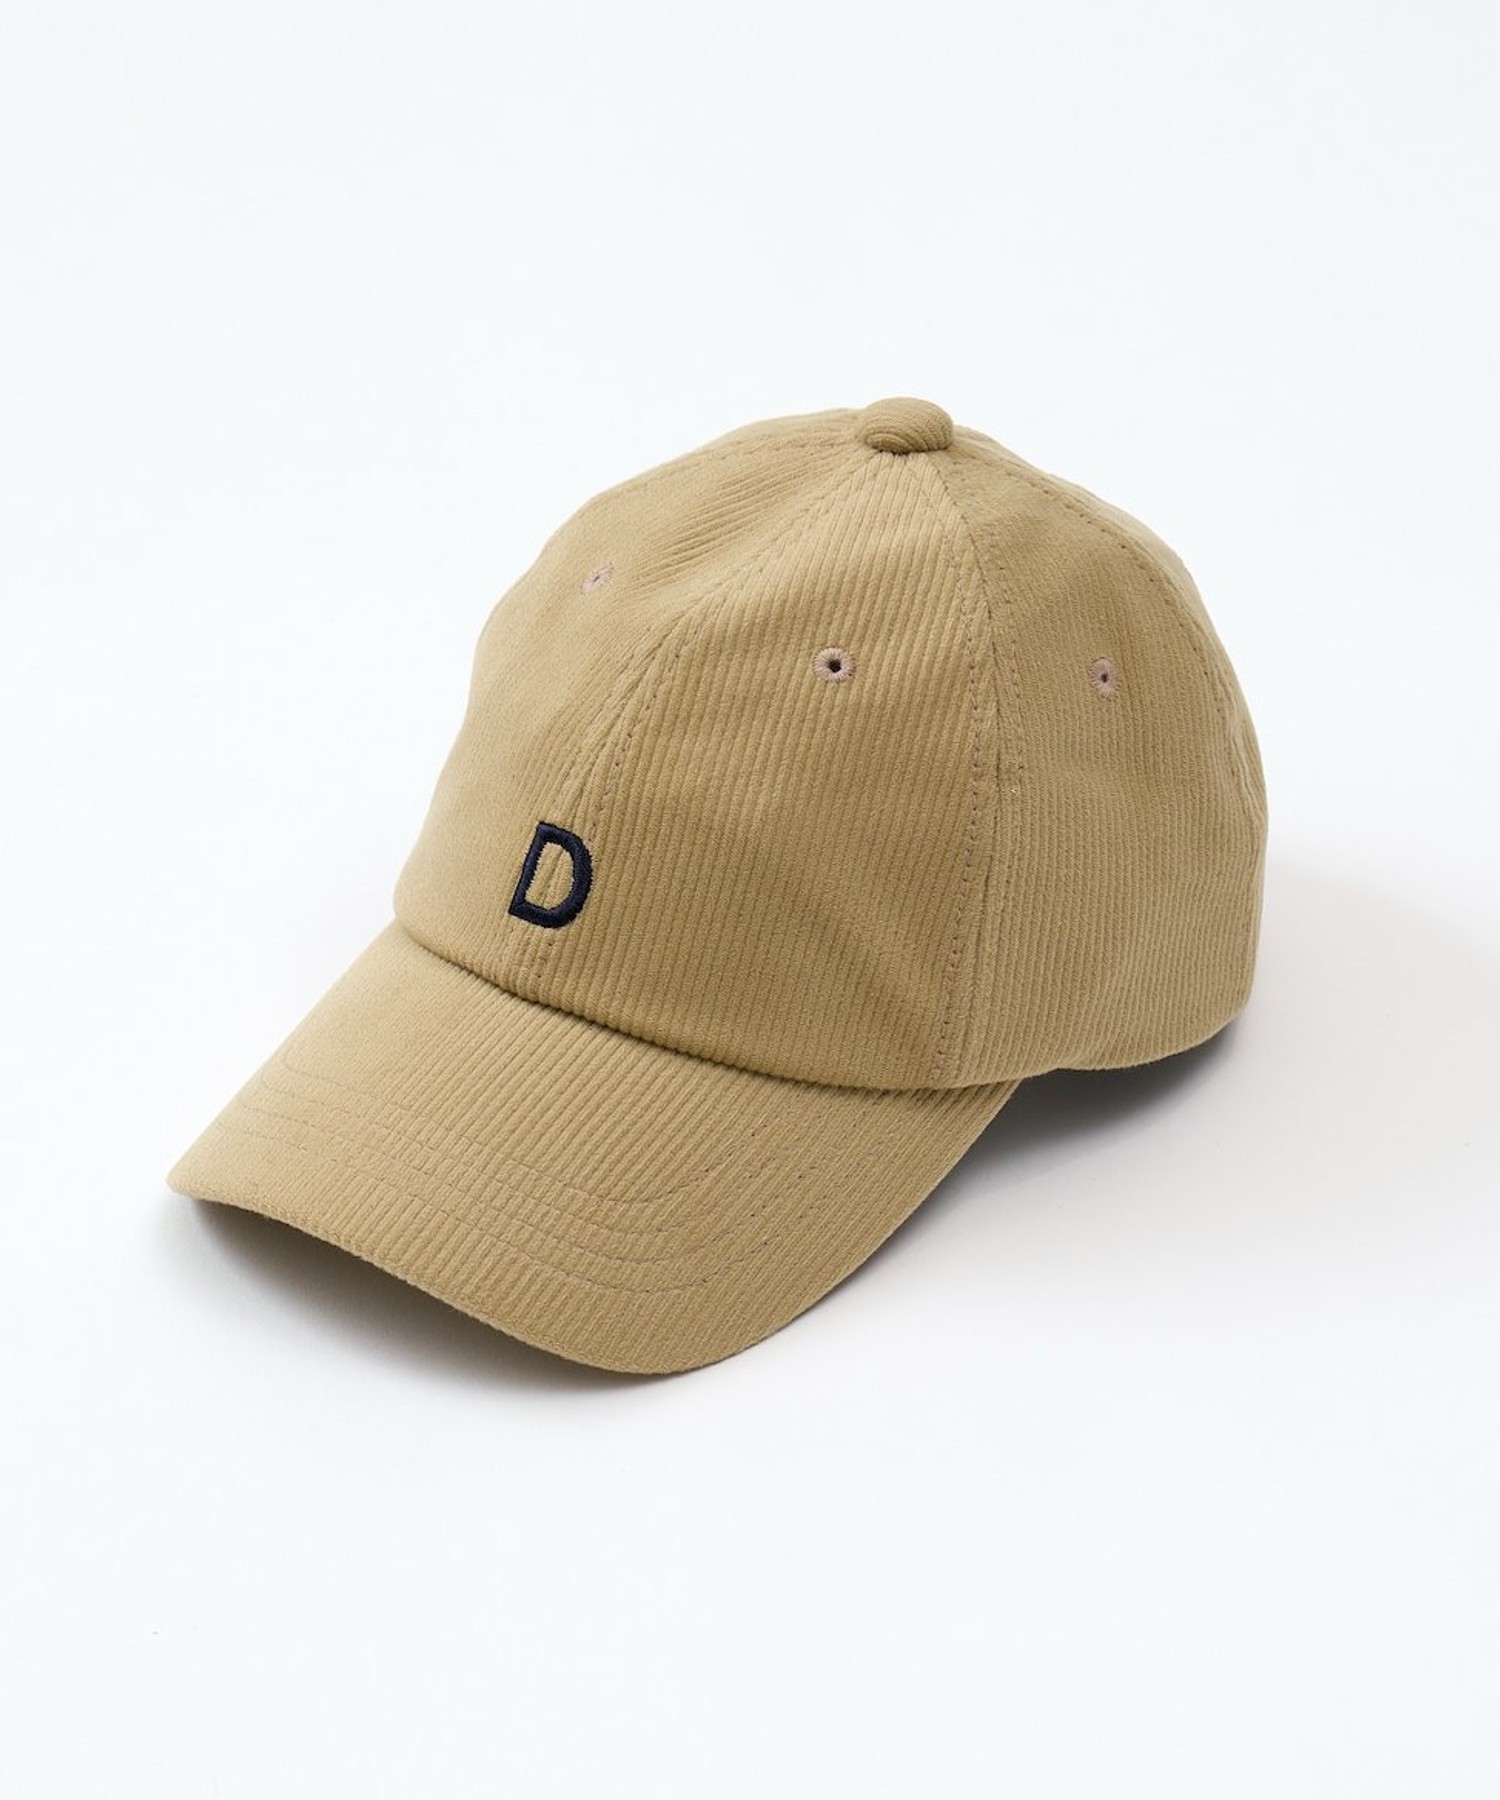 Dコーデュロイキャップ / D CORDUROY CAP